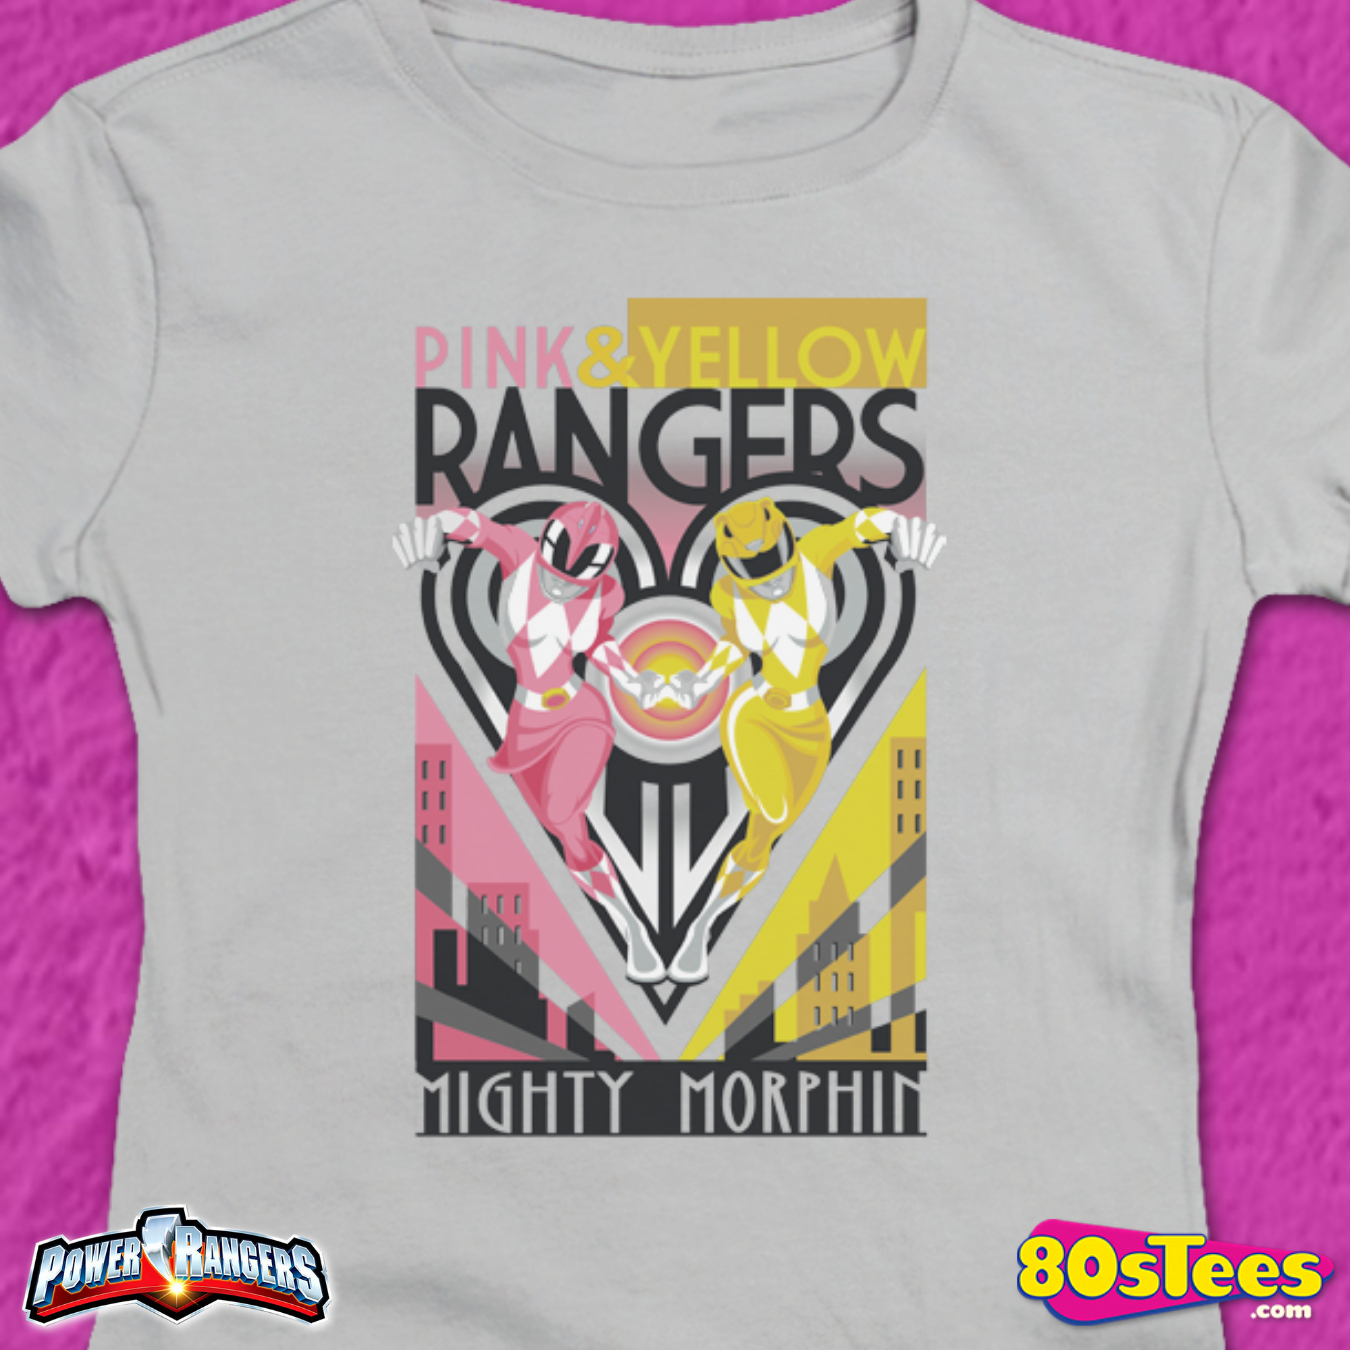 yellow ranger shirt